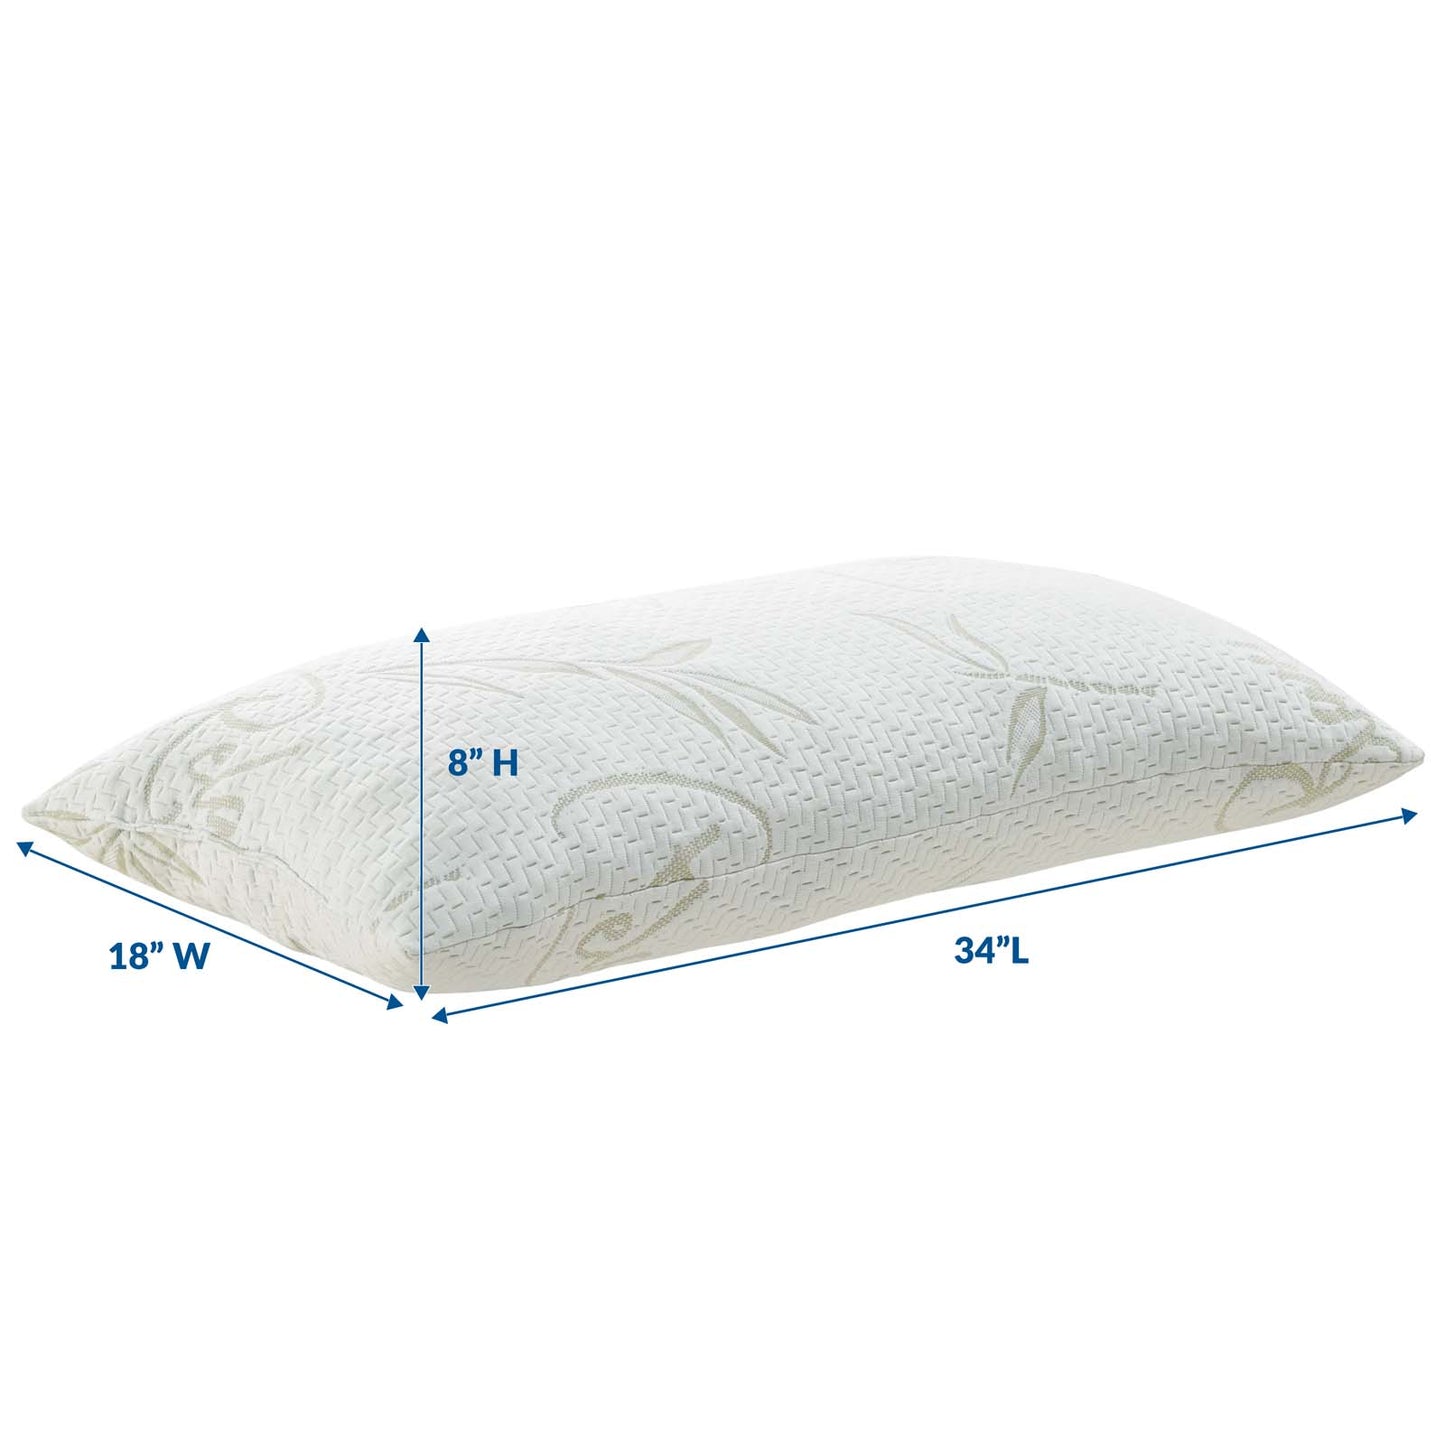 Relax King Size Pillow White MOD-5576-WHI